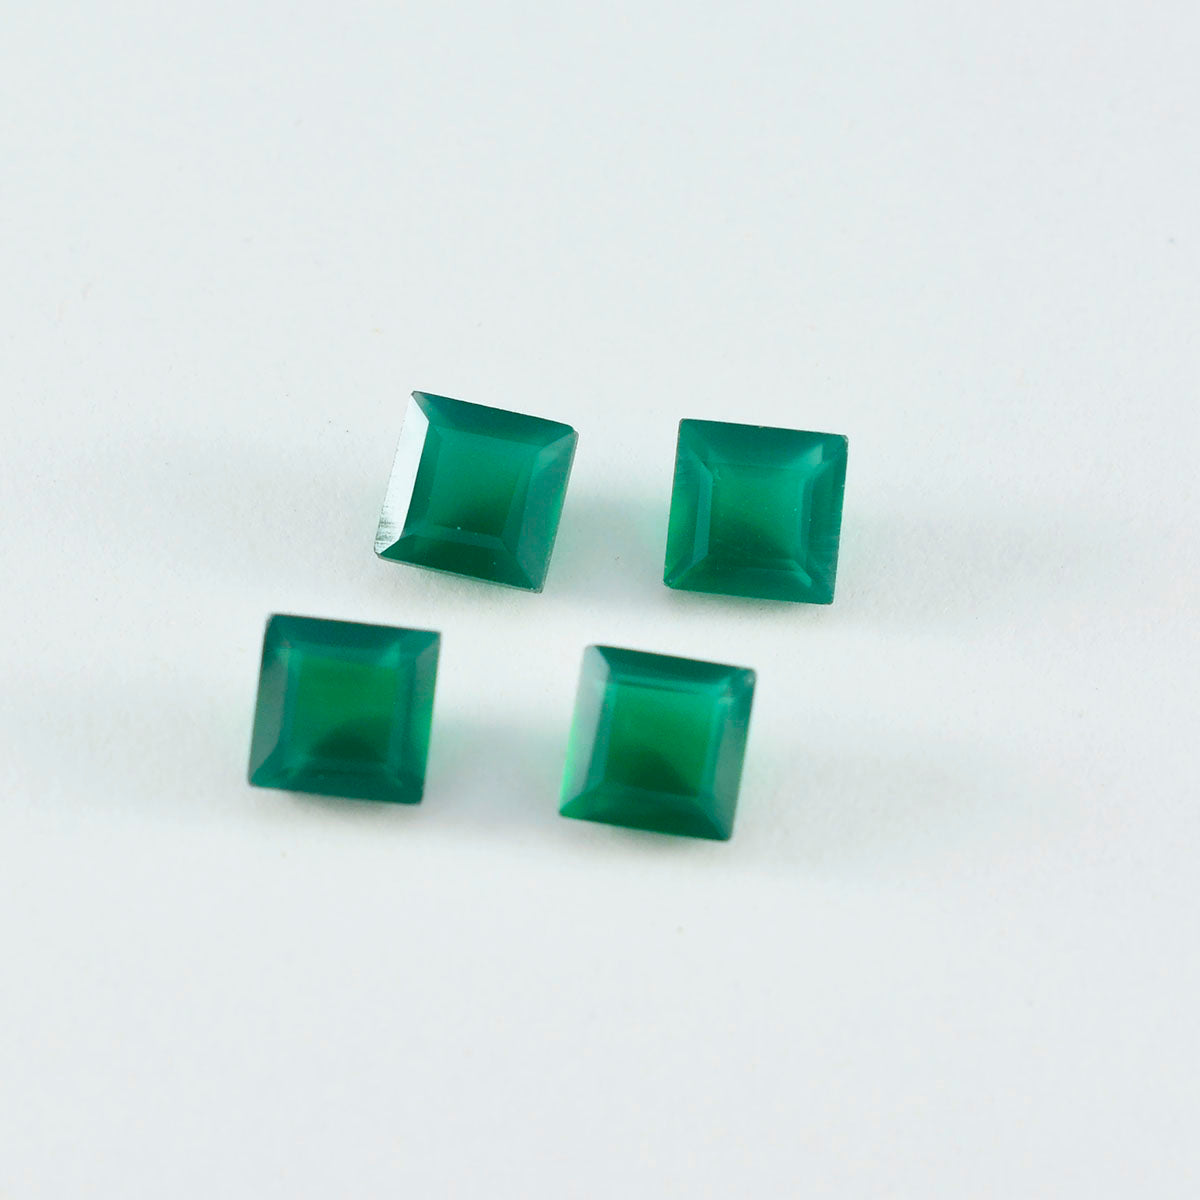 Riyogems 1PC natuurlijke groene onyx gefacetteerd 7x7 mm vierkante vorm uitstekende kwaliteit edelstenen